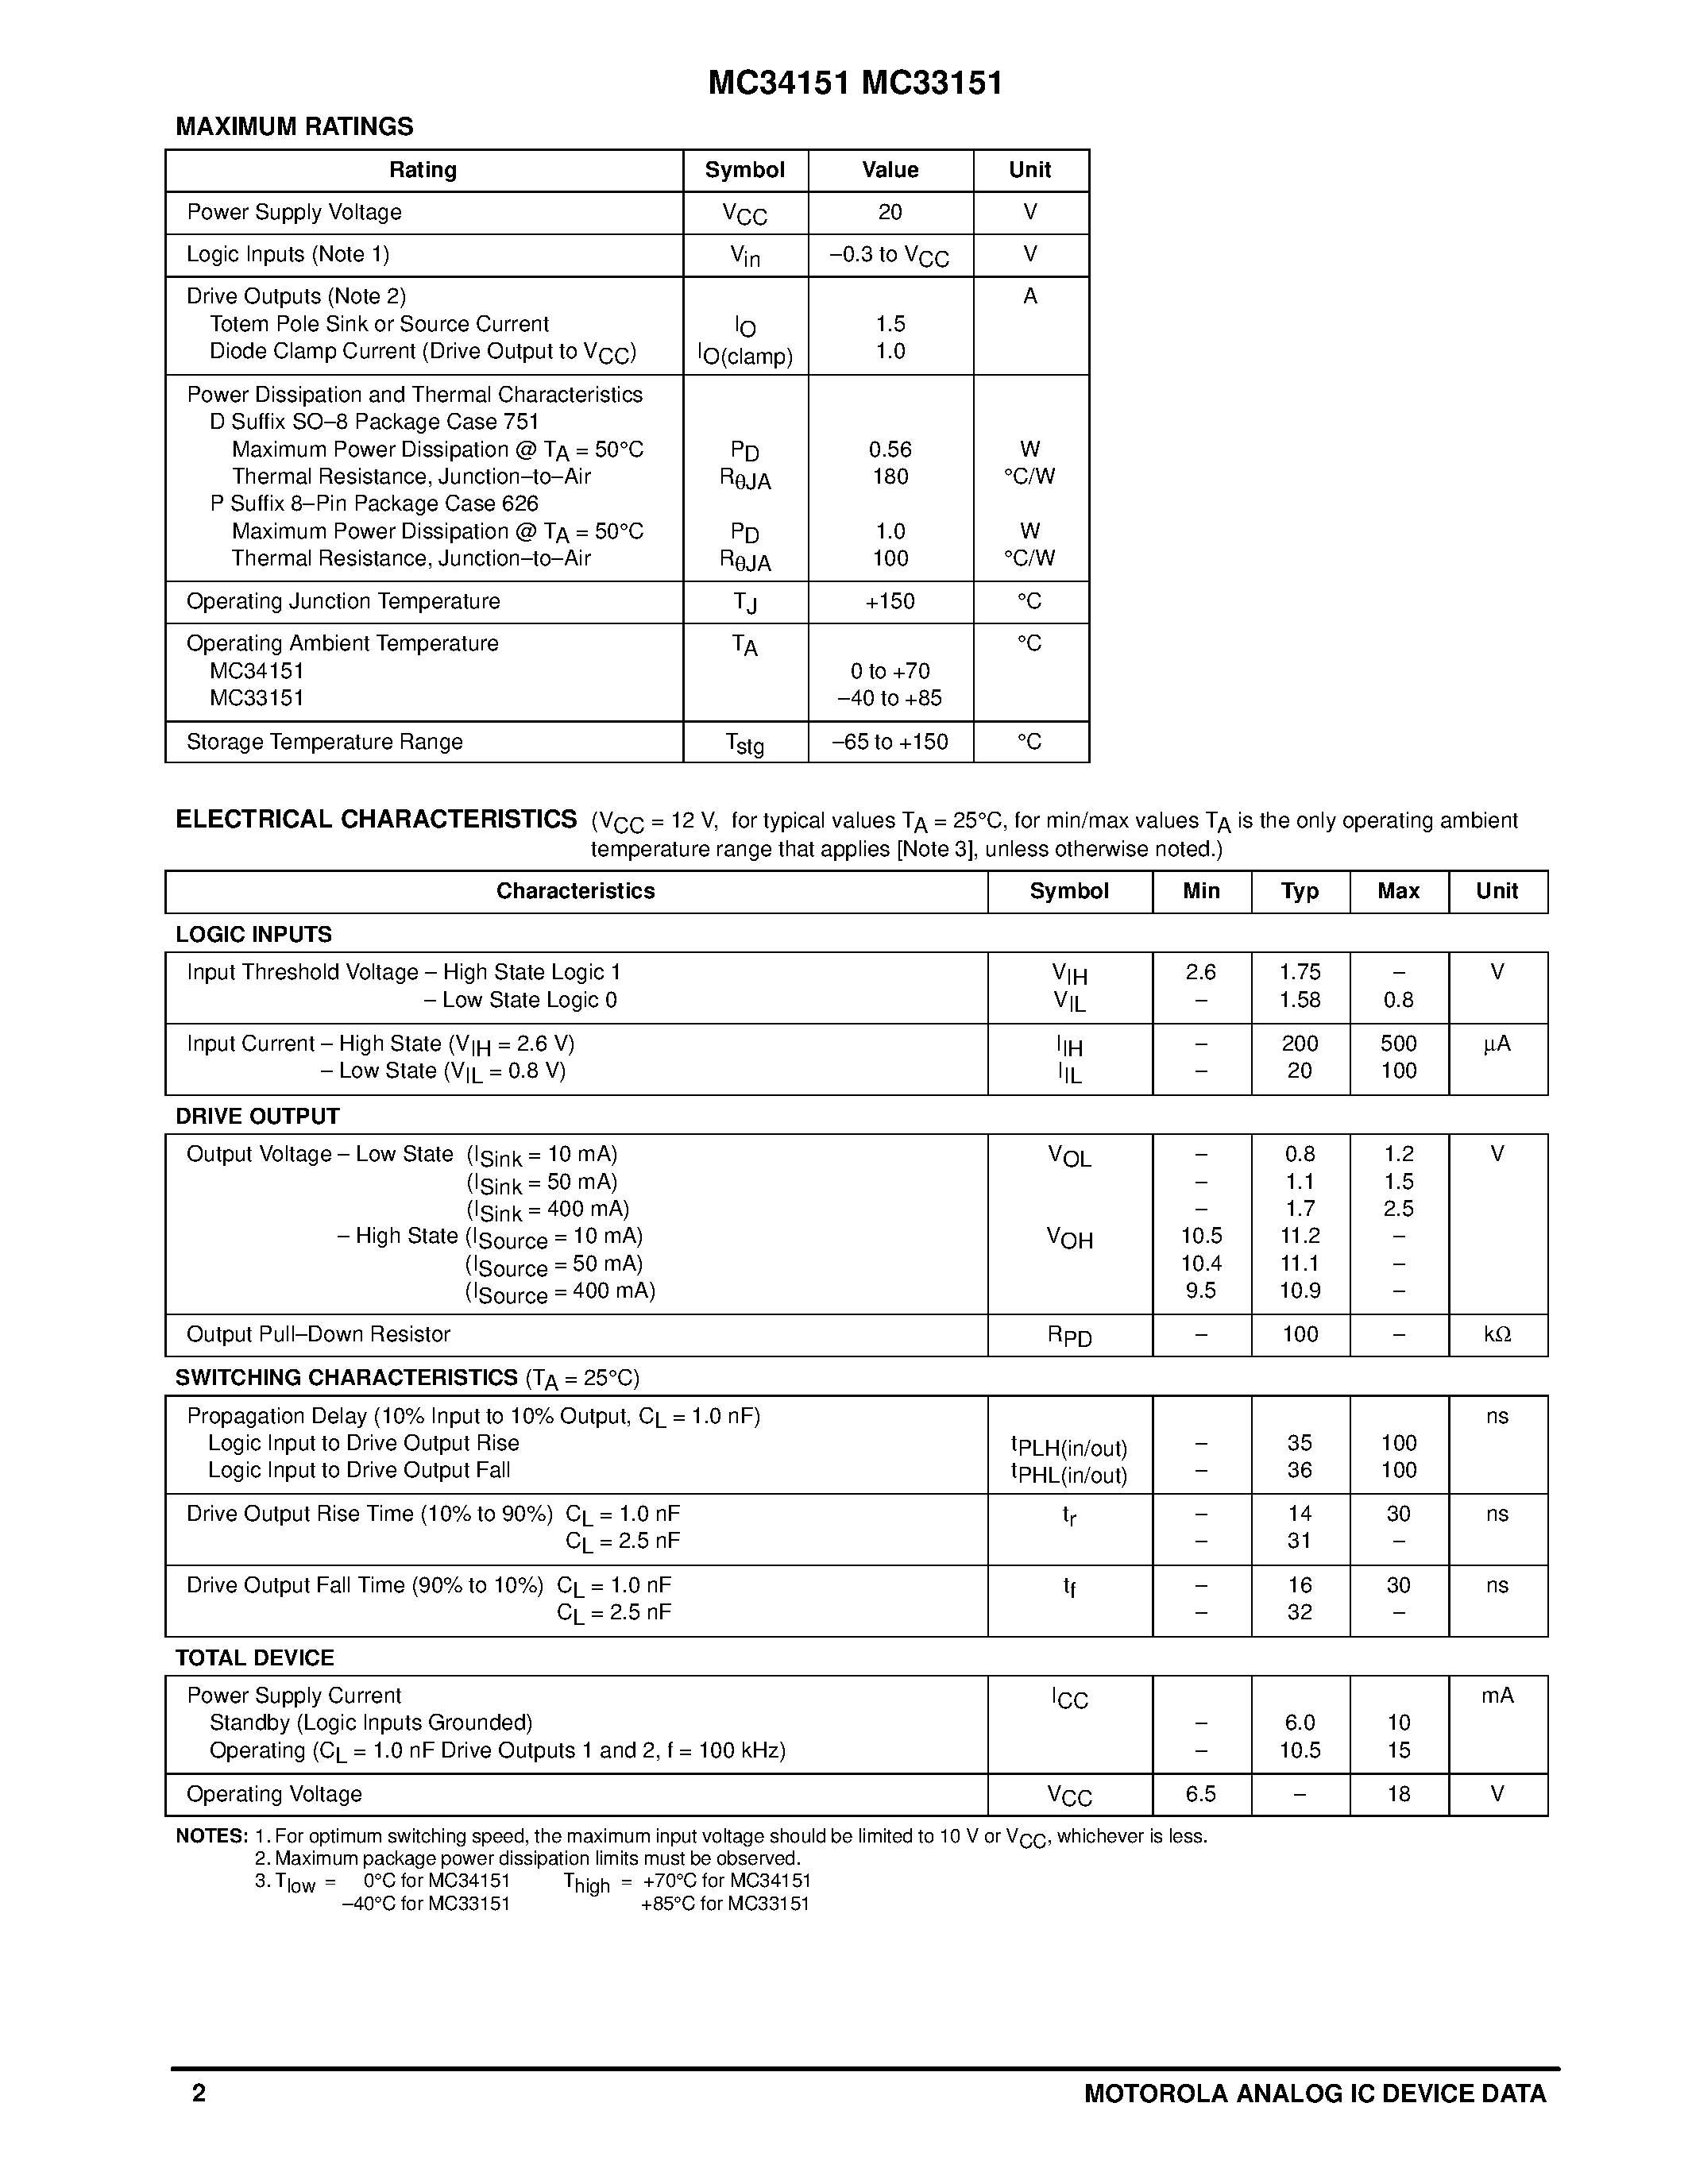 Datasheet MC33151 - (MC34151 / MC33151) HIGH SPEED DUAL MOSFET DRIVERS page 2